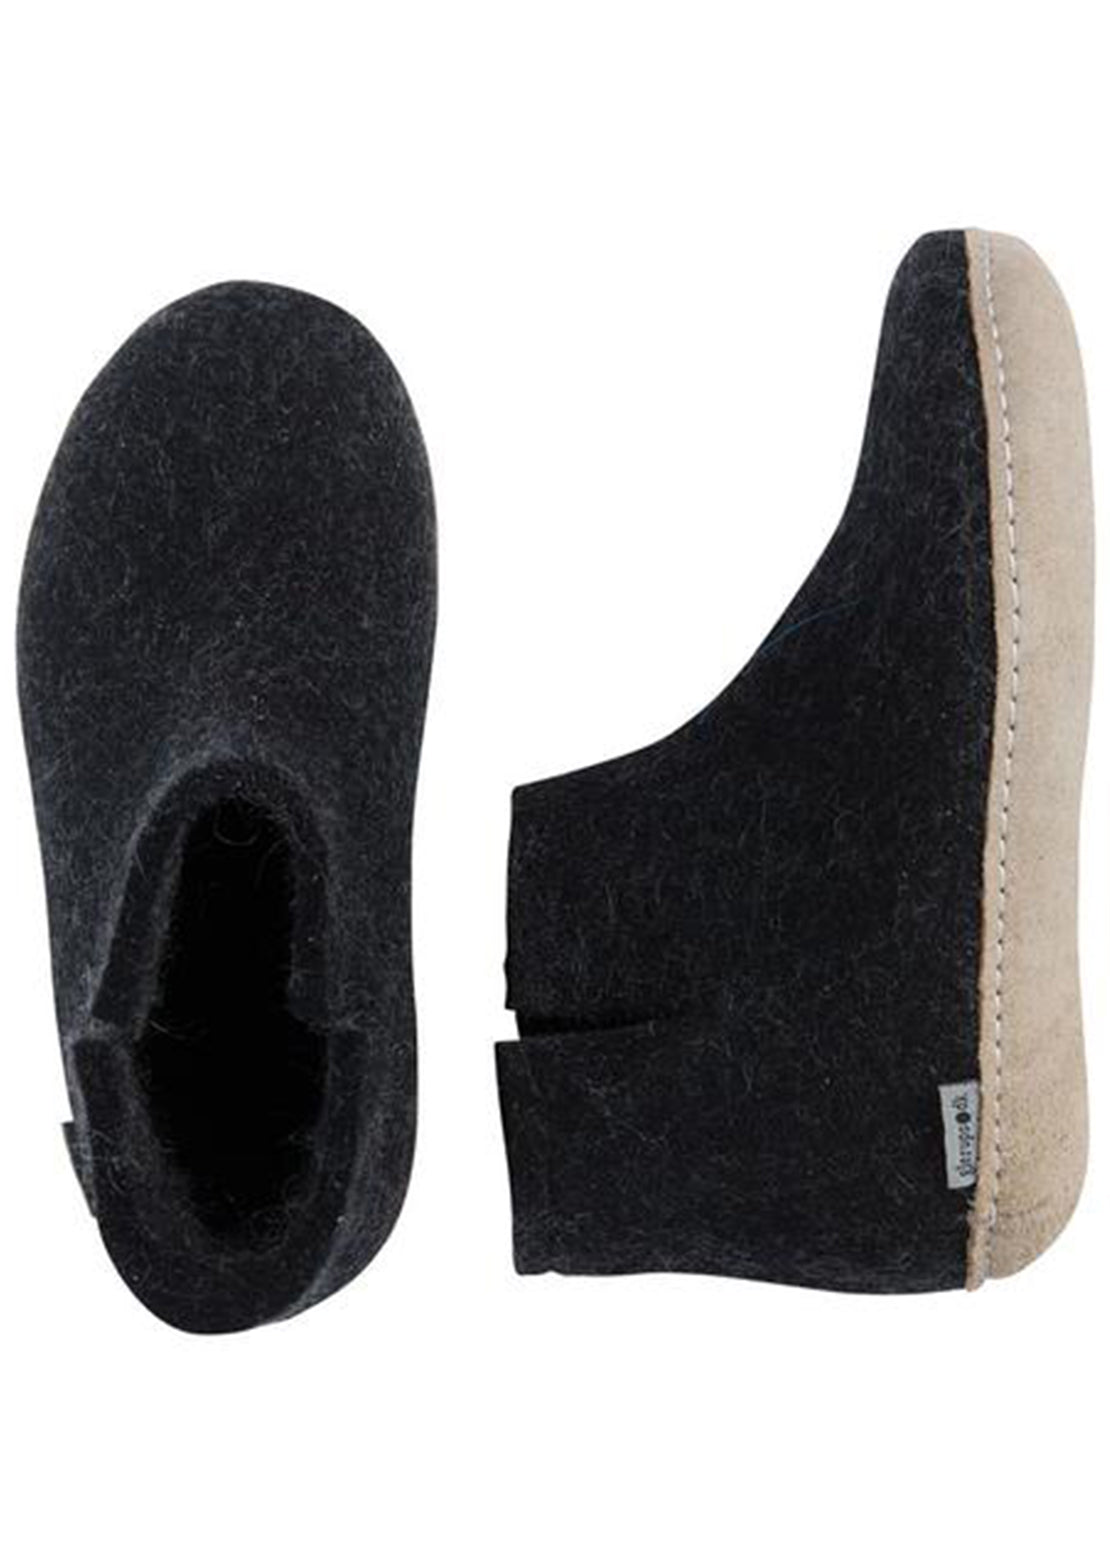 Glerups Unisex Leather Sole Boots Black